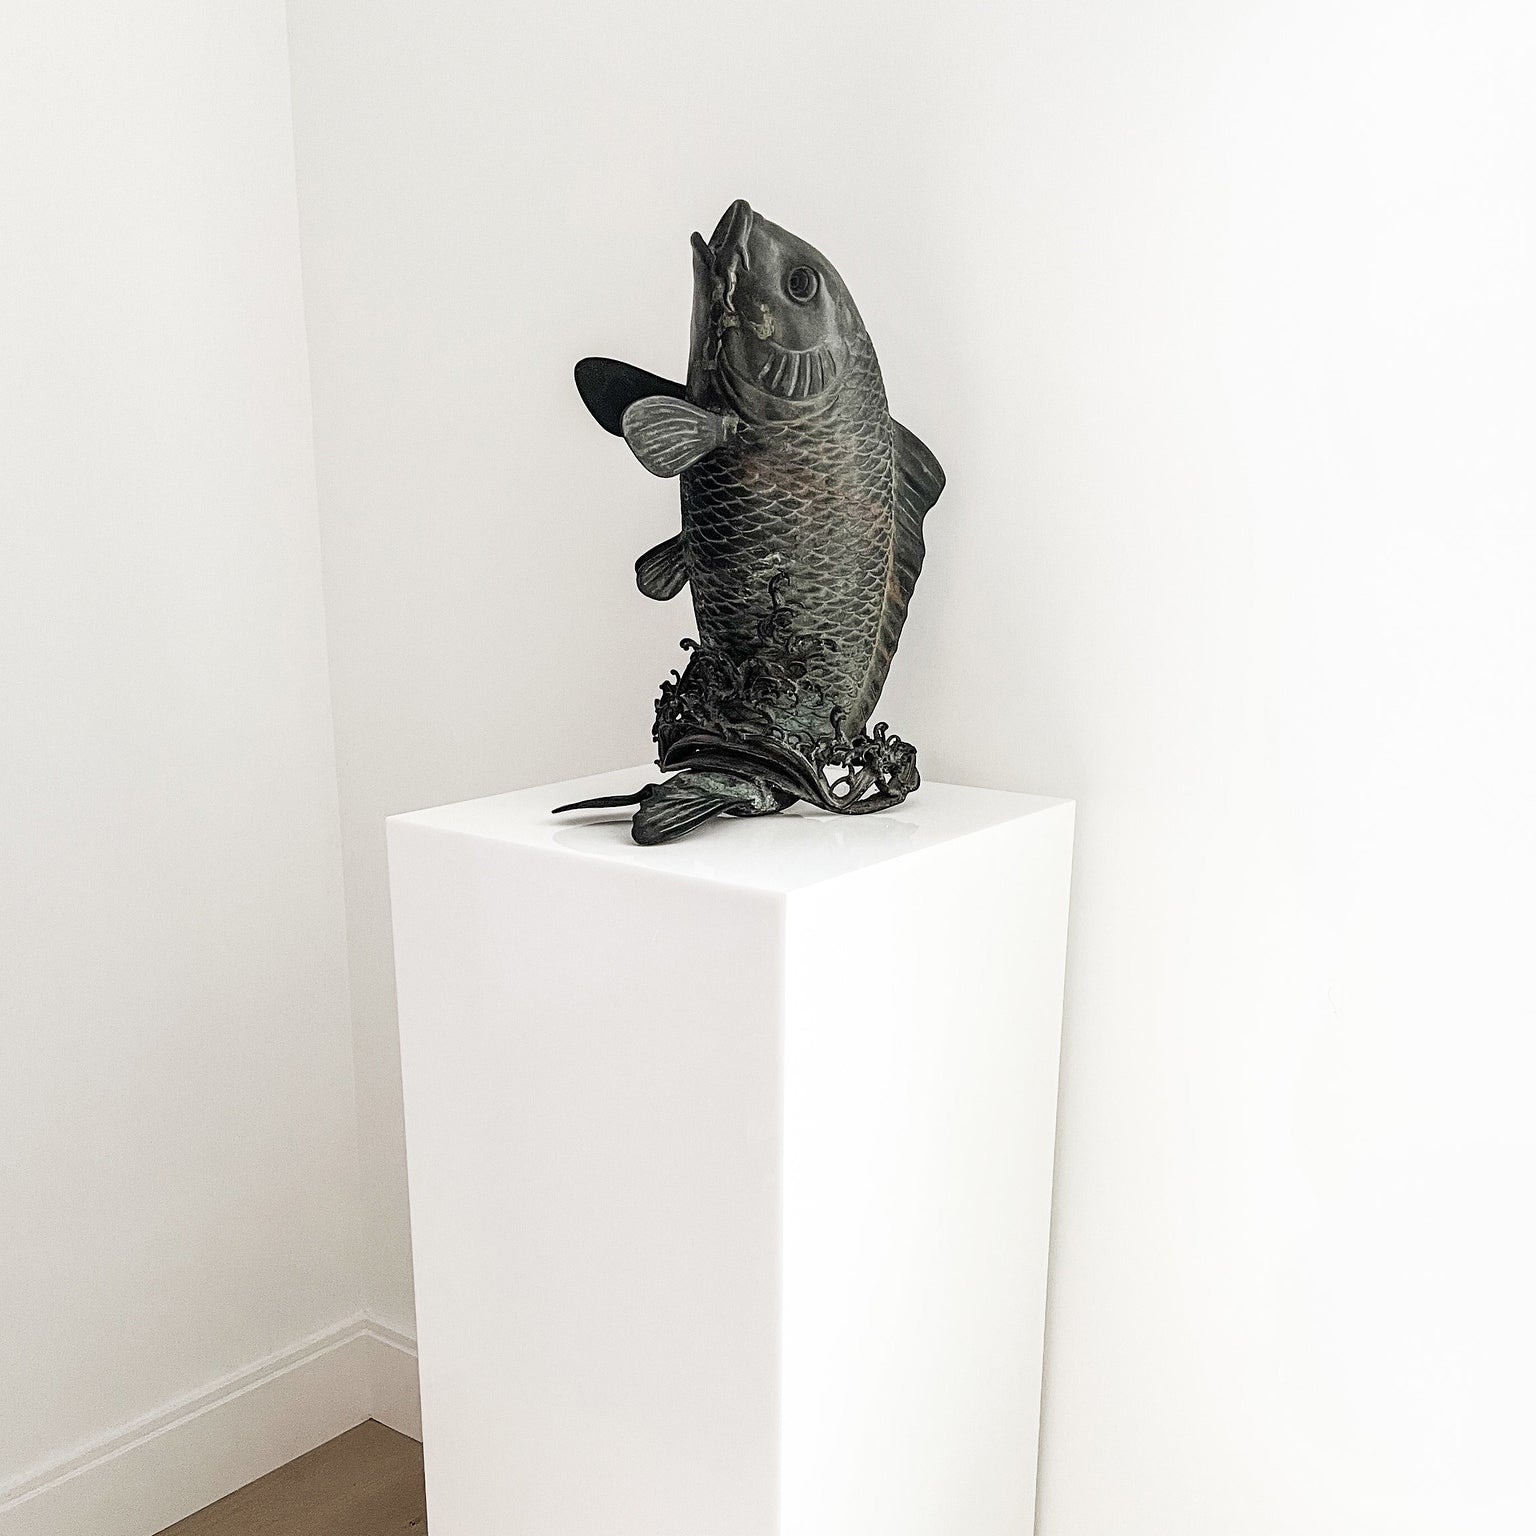 White acrylic pedestal with bronze cast fish sculpture.